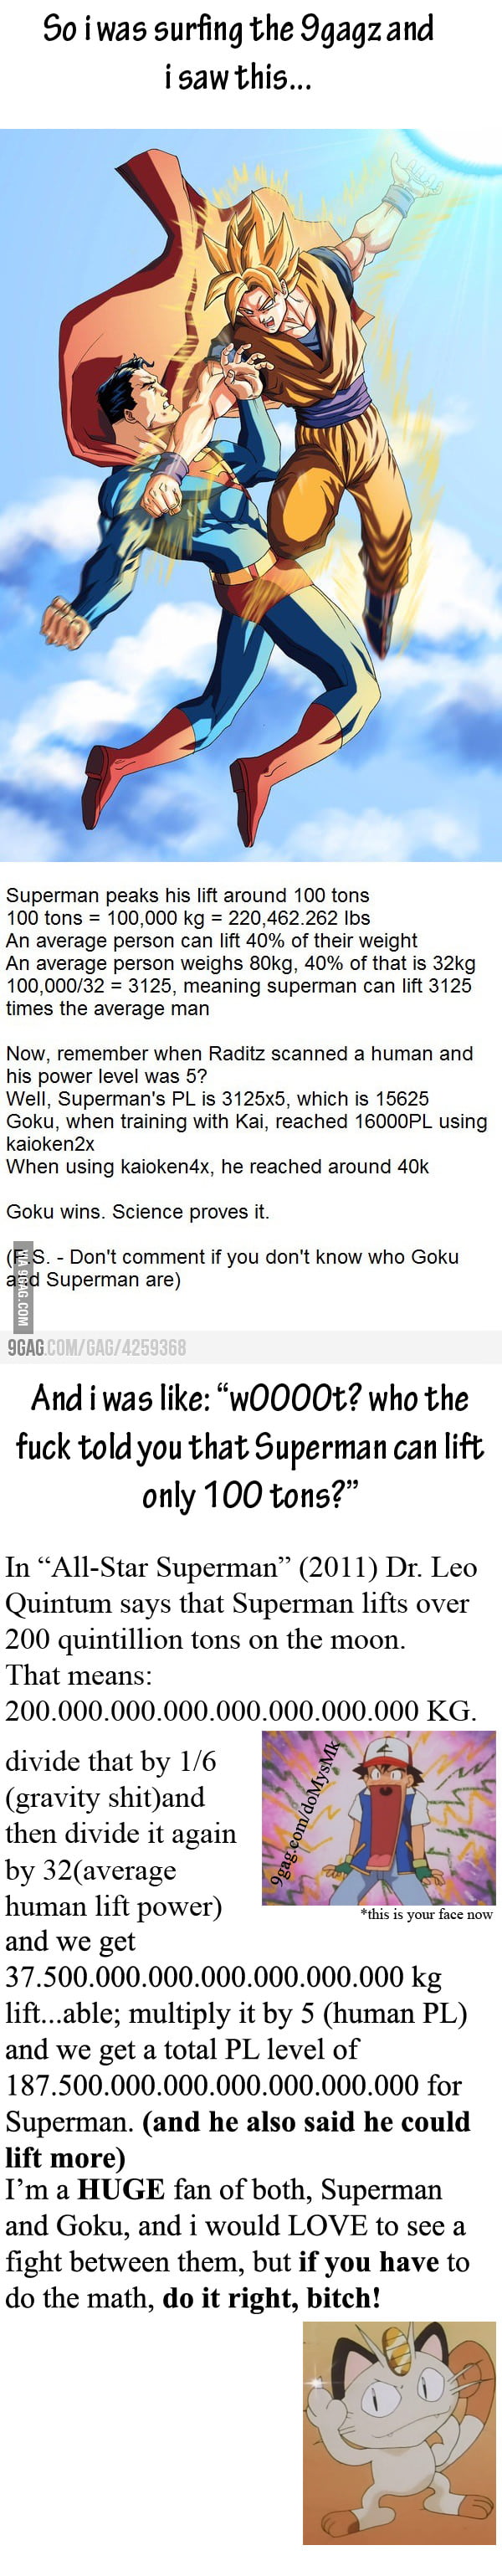 superman-vs-goku-math-done-right-9gag